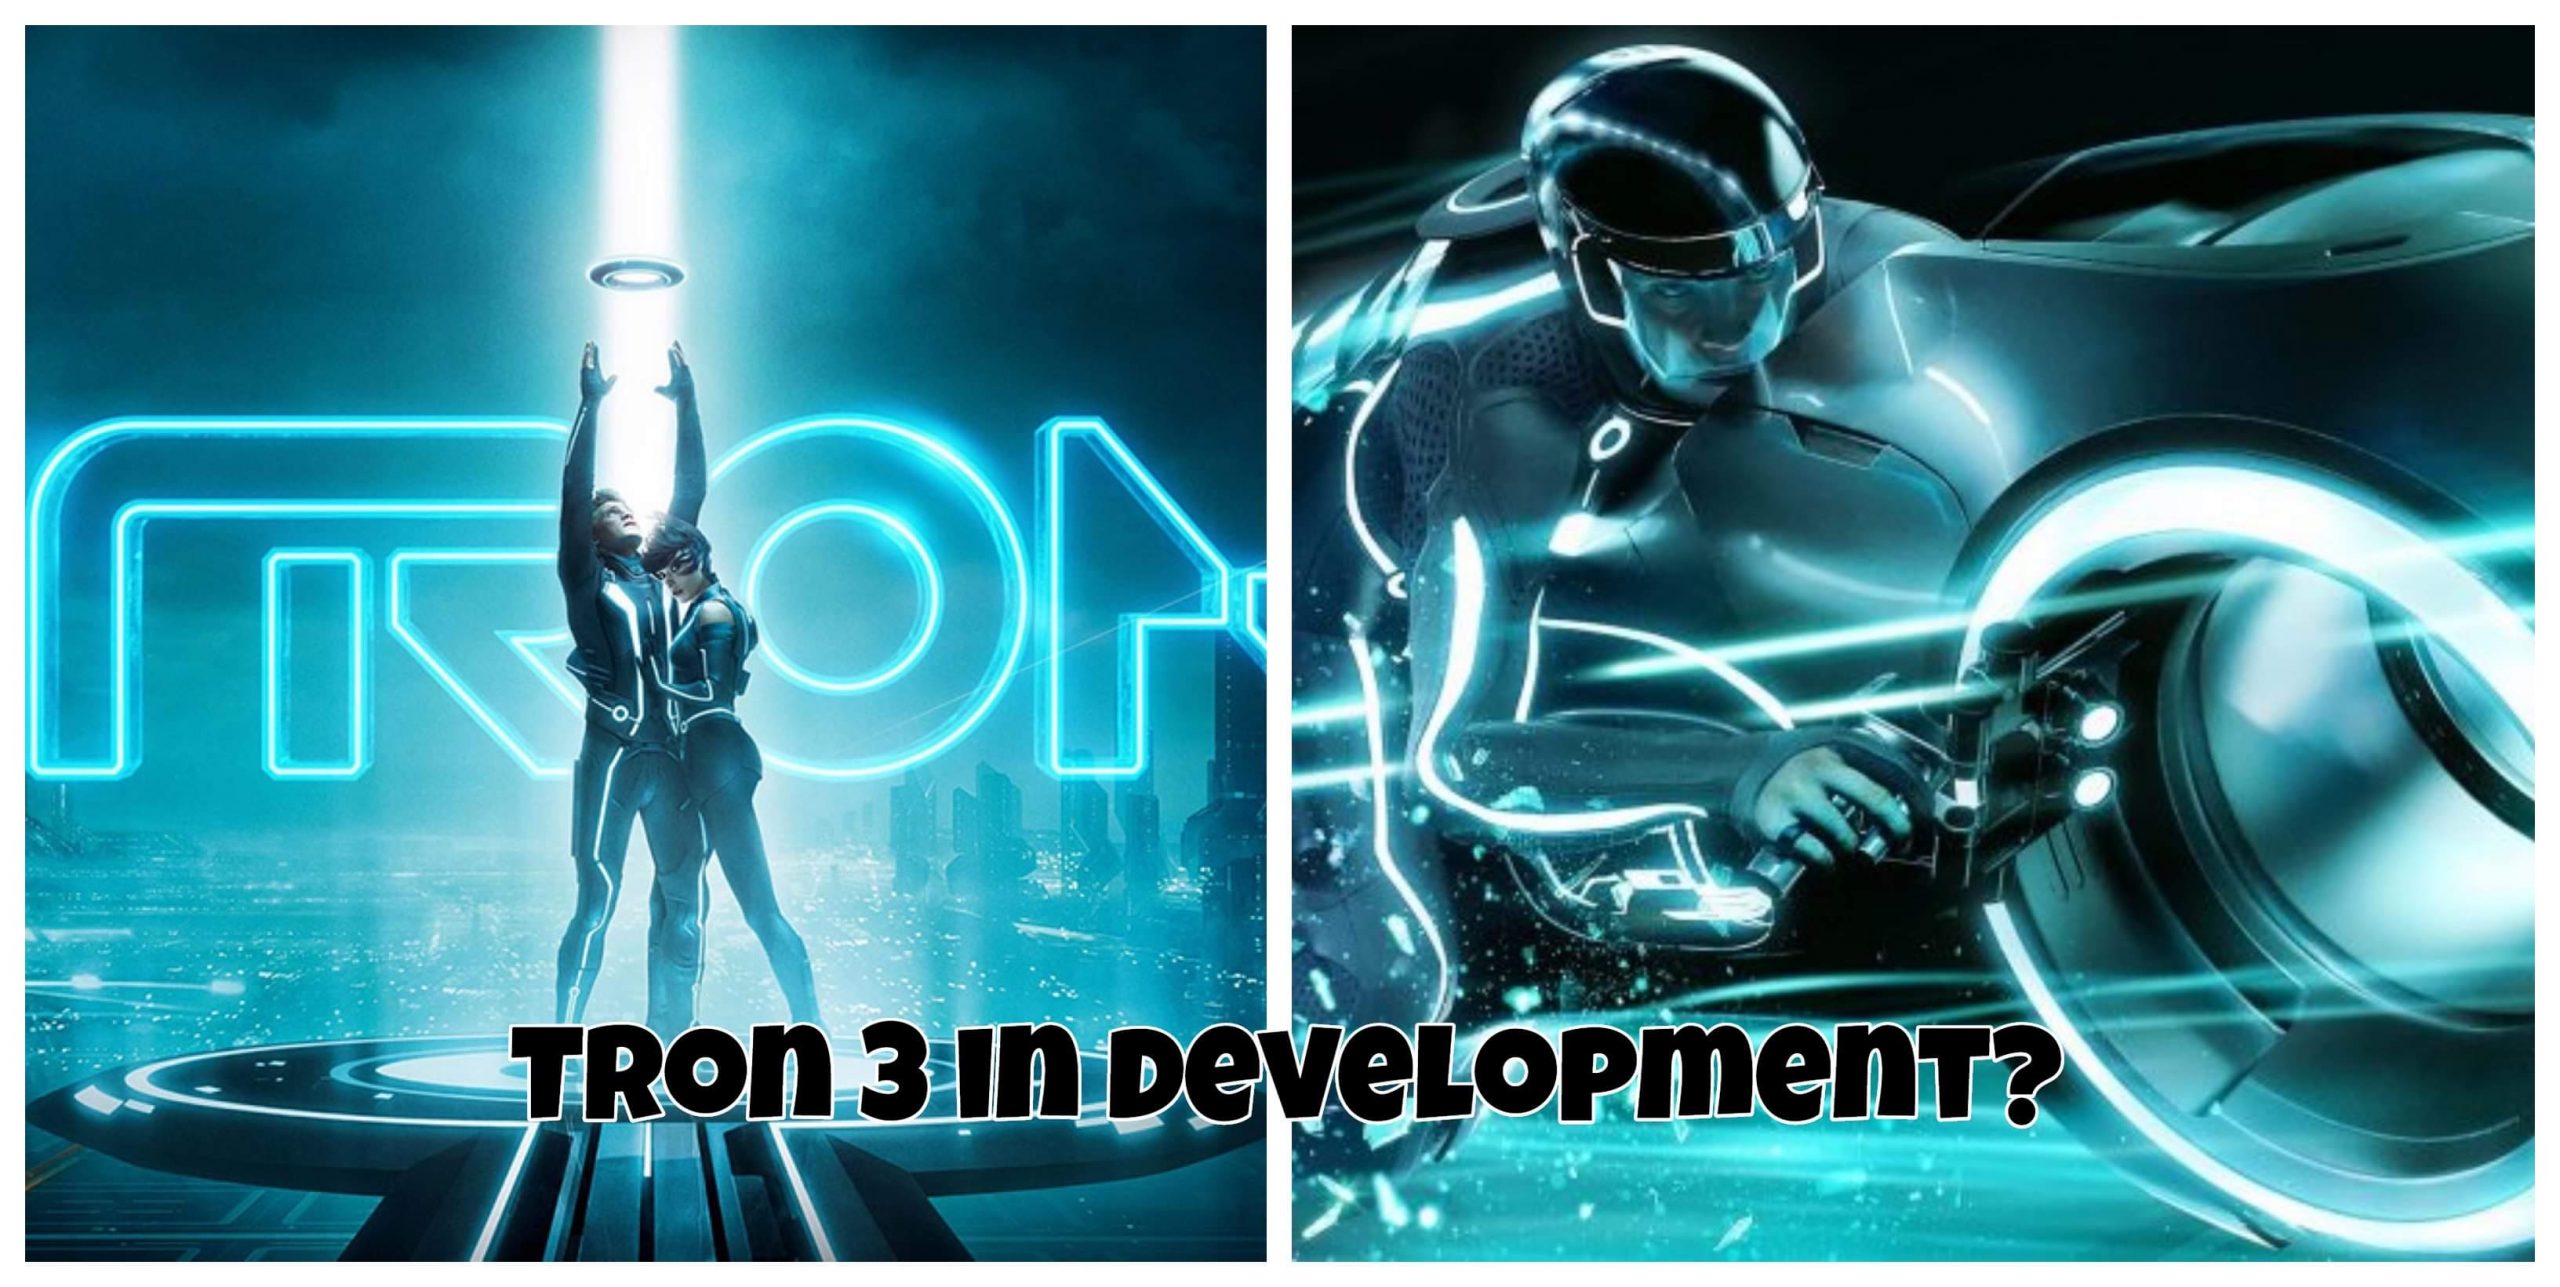 Tron 3 in development starting Jared Leto